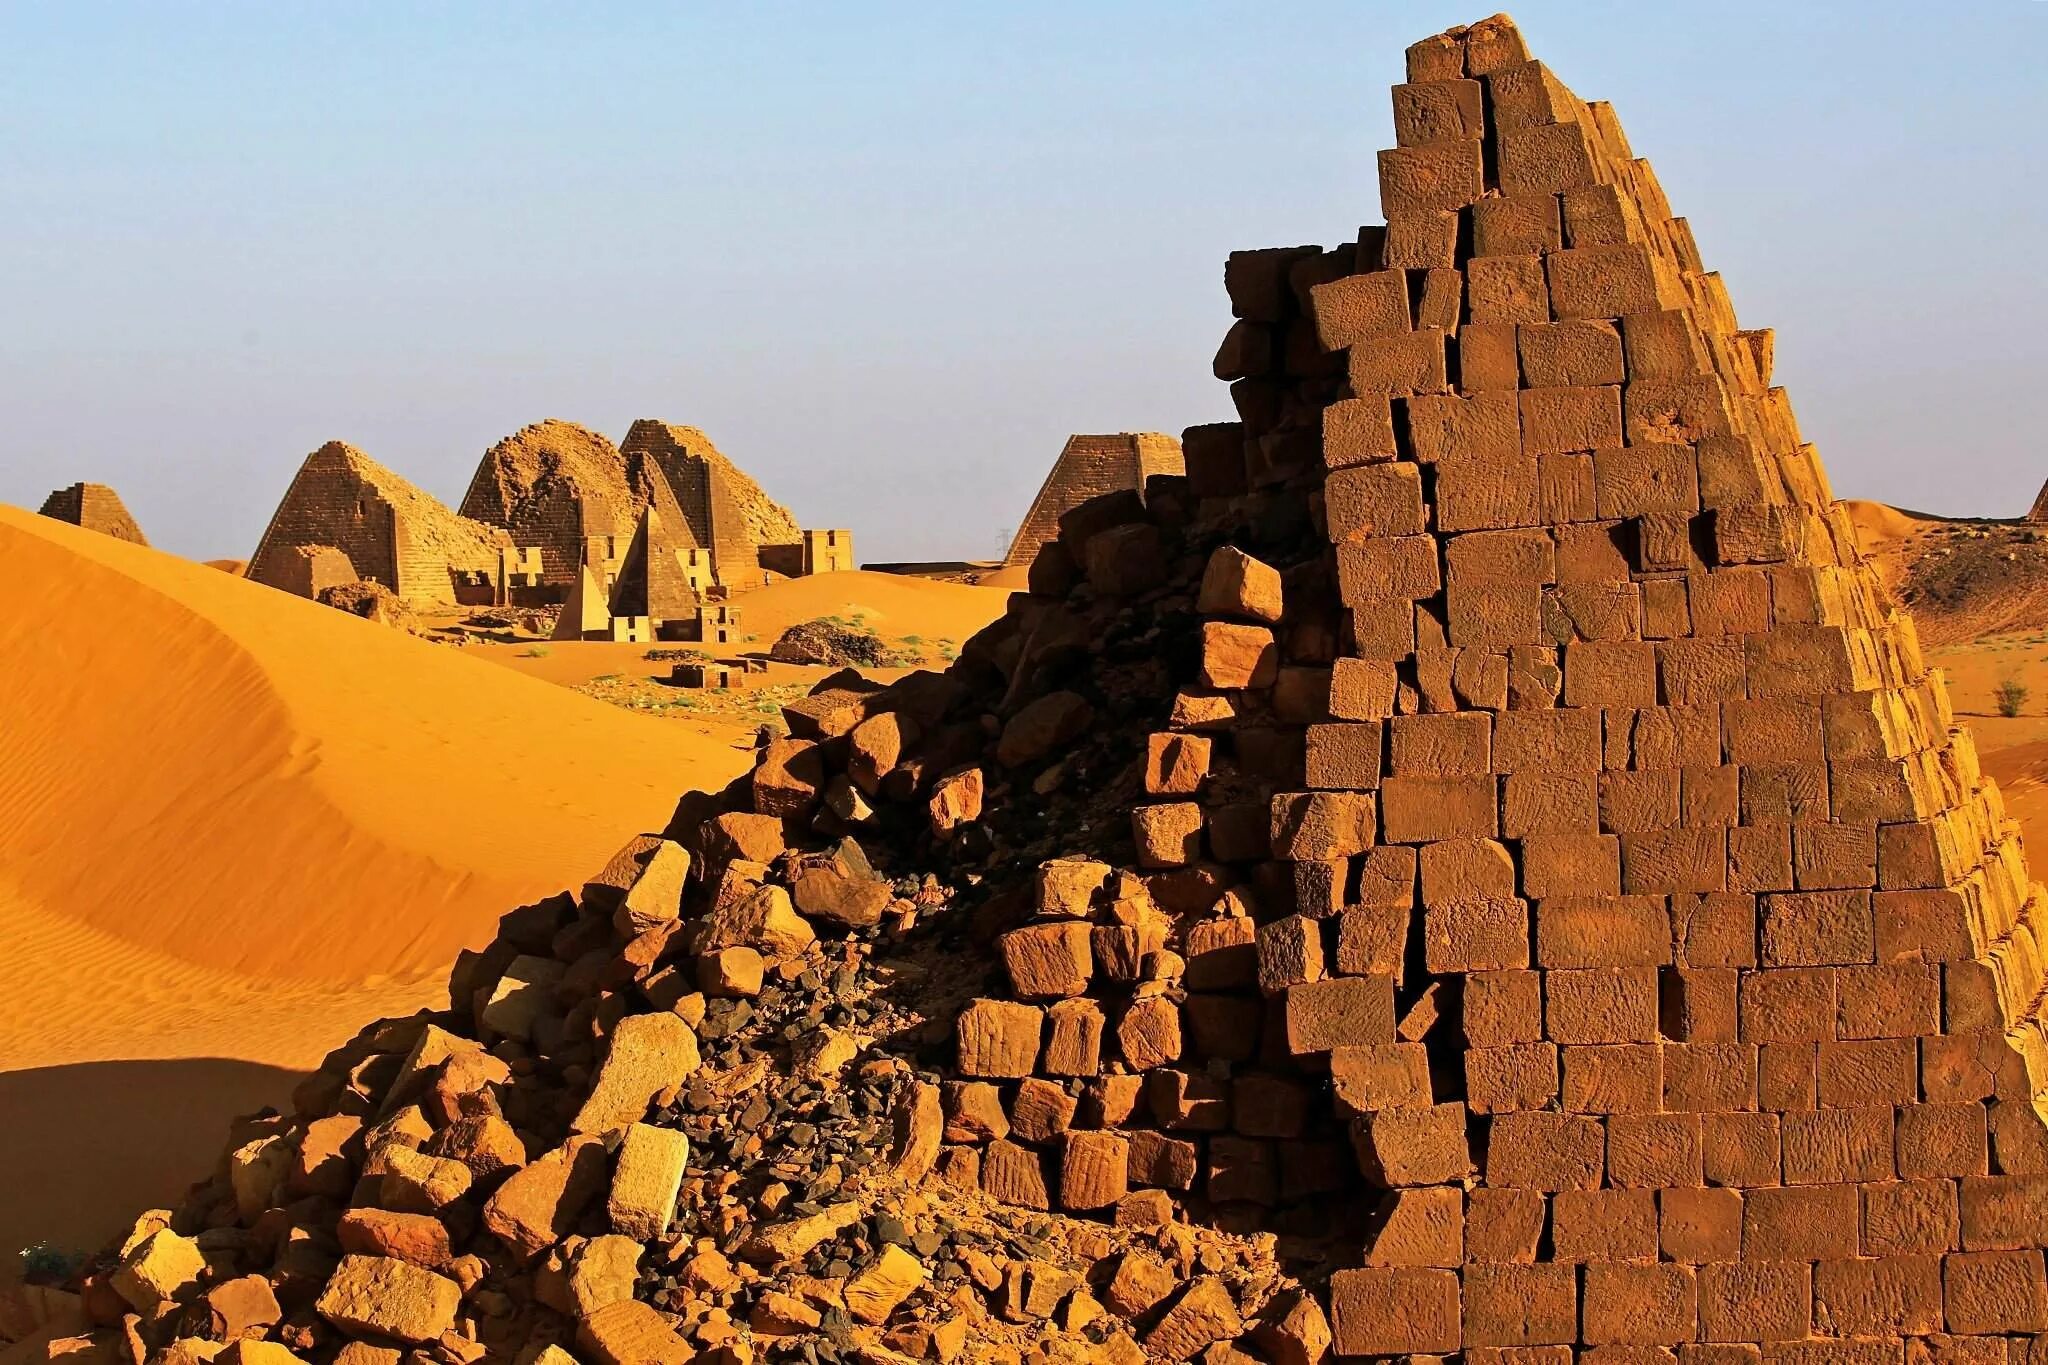 Характер взаимоотношений с природой цивилизации мероэ. Пирамиды Мероэ. Мероэ Судан. Нубийские пирамиды Мероэ. 200 Пирамид древнего царства куш. Пирамиды Судана.